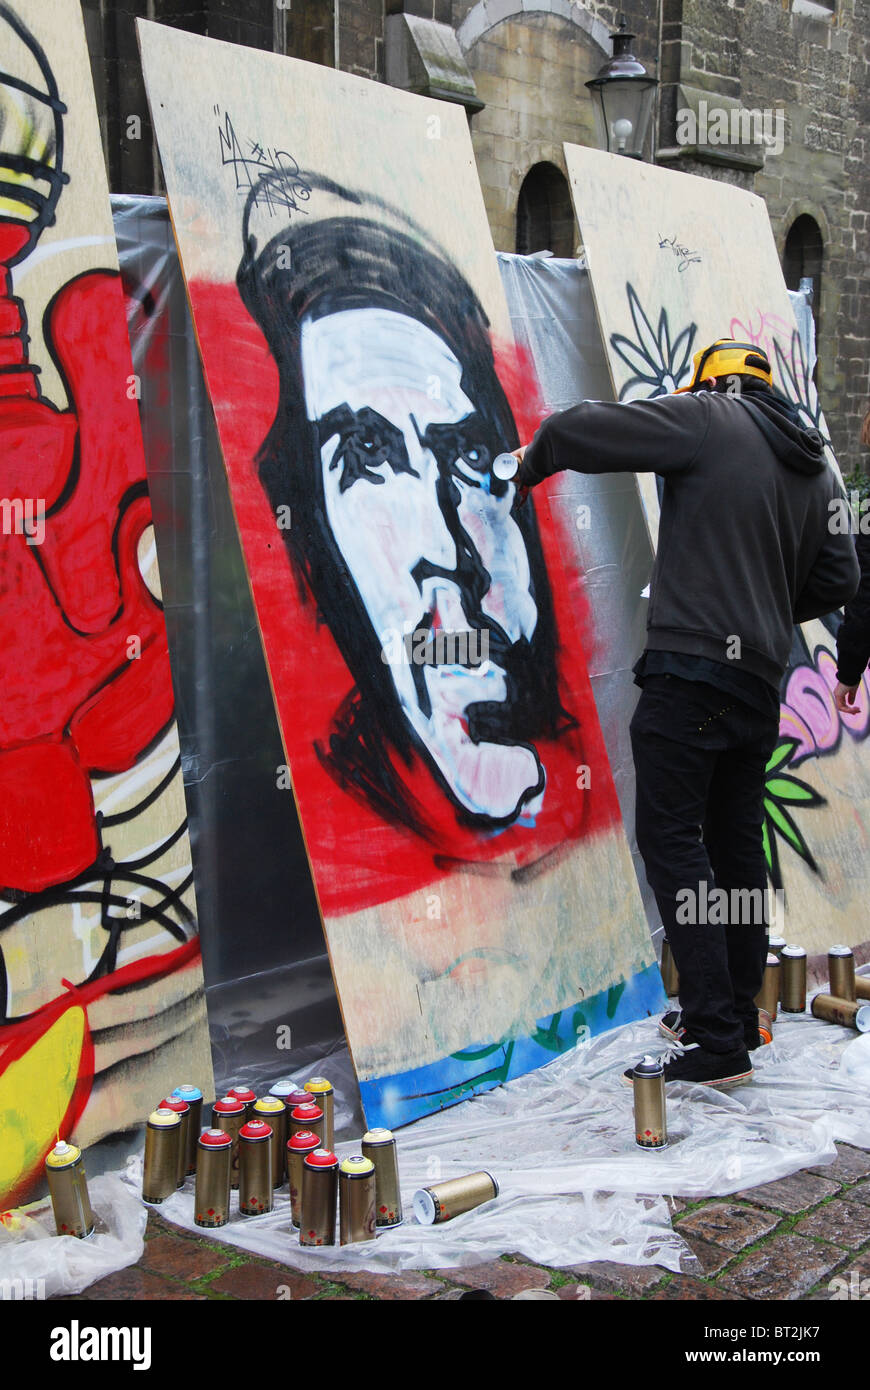 spray painted portrait of Che Guevara at Graffiti workshop Stock Photo